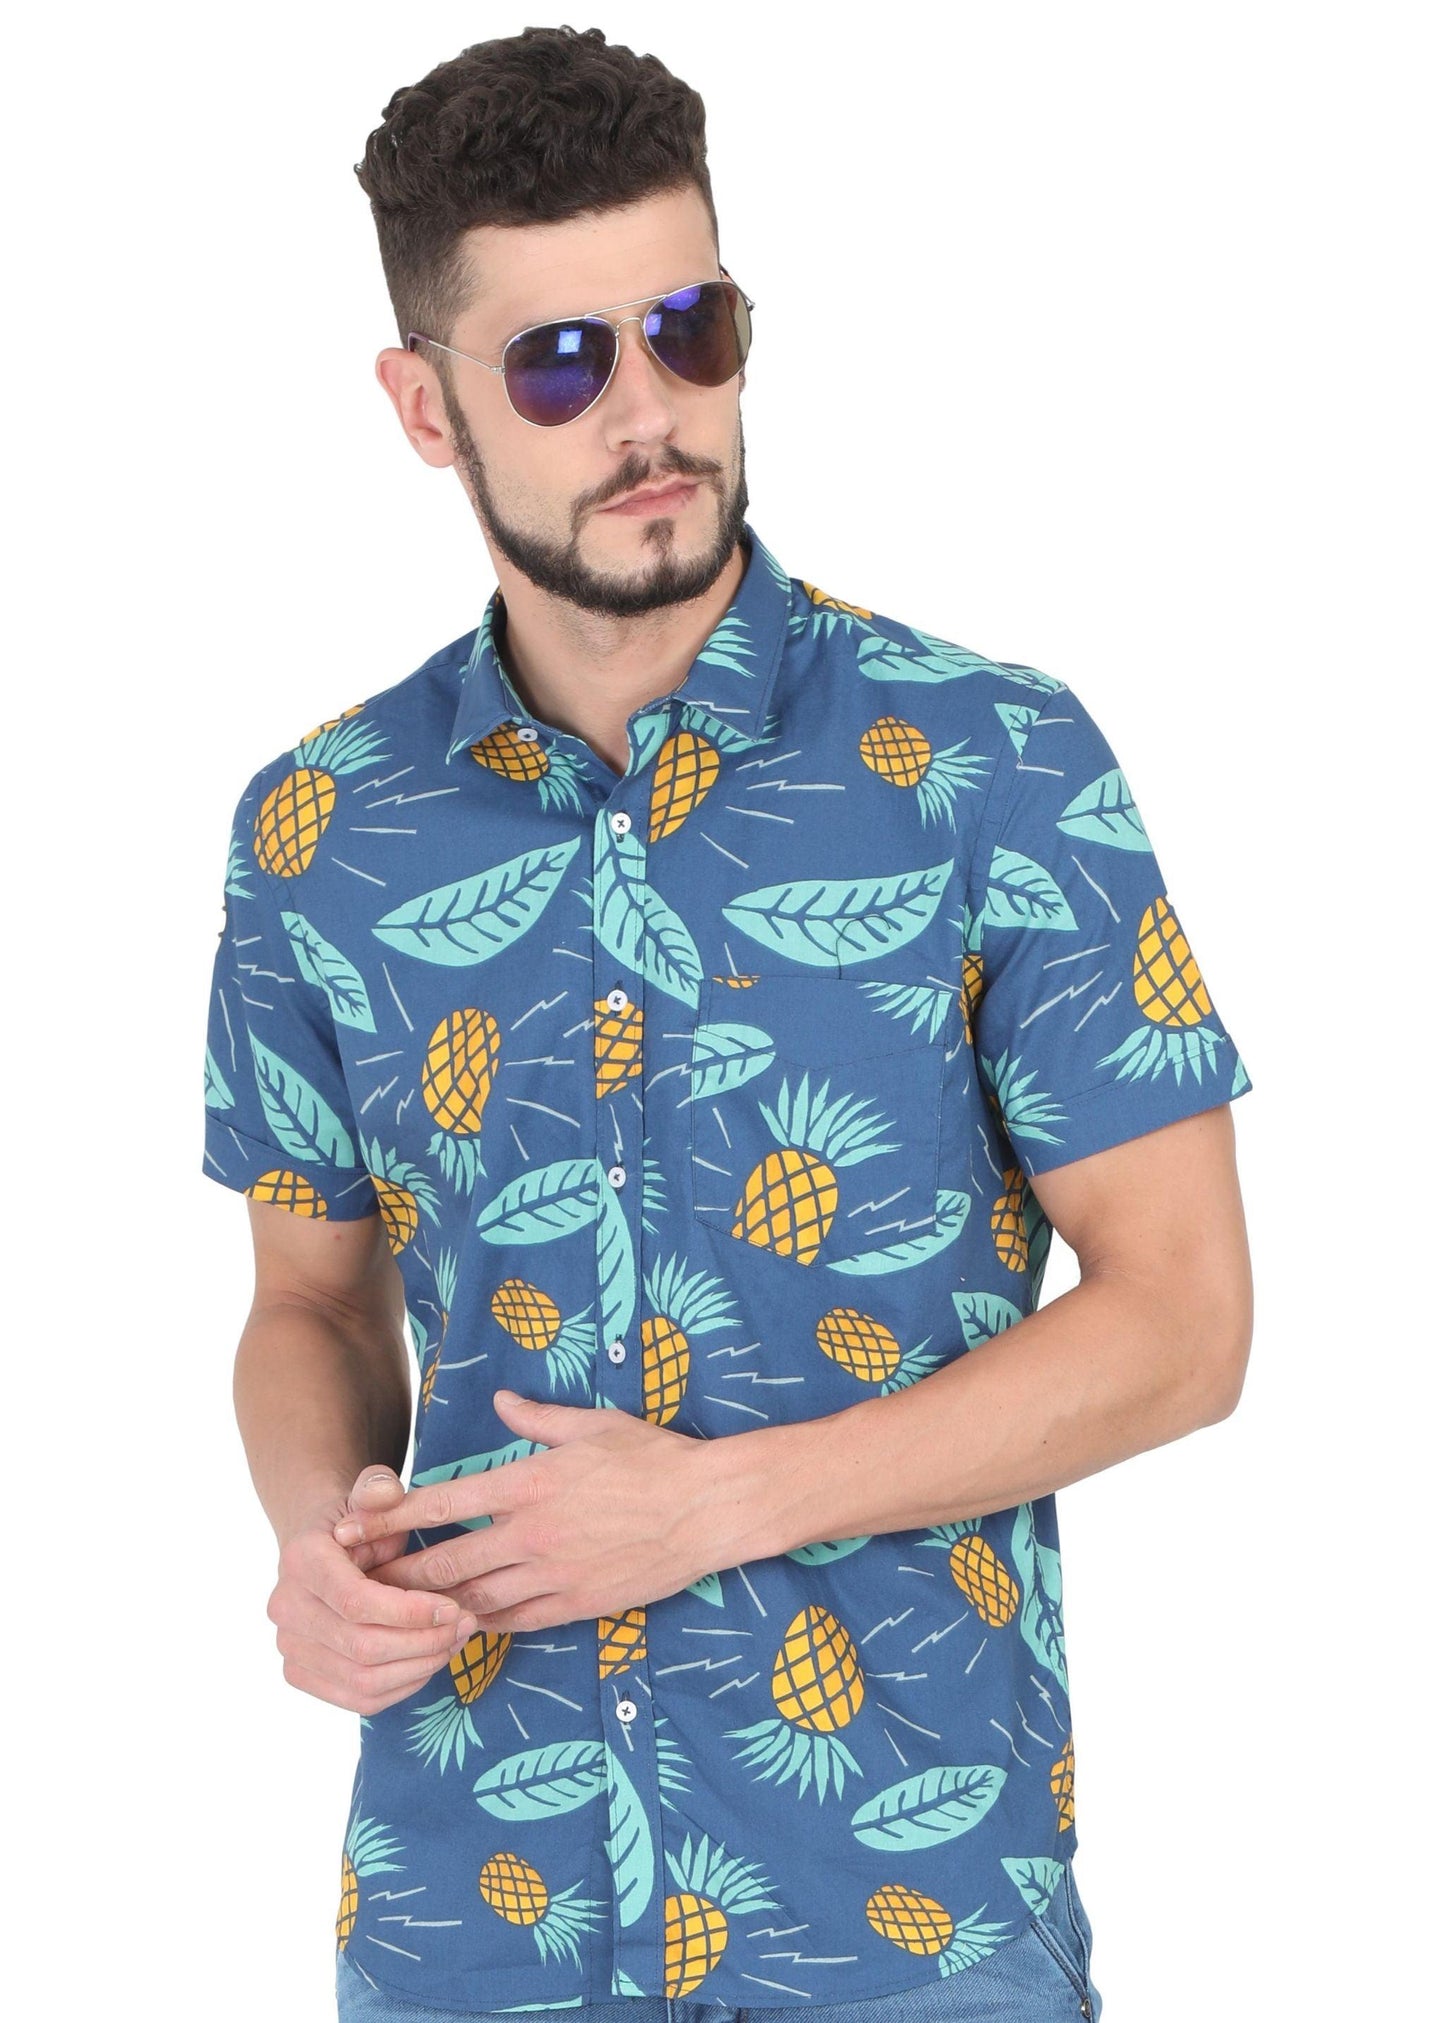 Tusok-blue-pineappleFeatured Shirt, Vacation-Printed Shirtimage-Blue Pineapple (7)